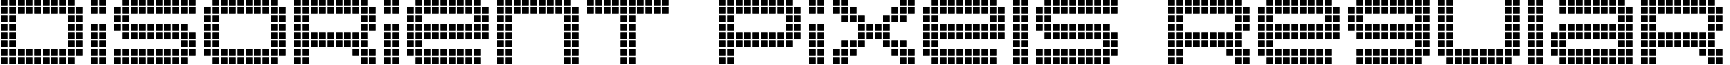 Disorient Pixels Regular disorient_pixels.ttf